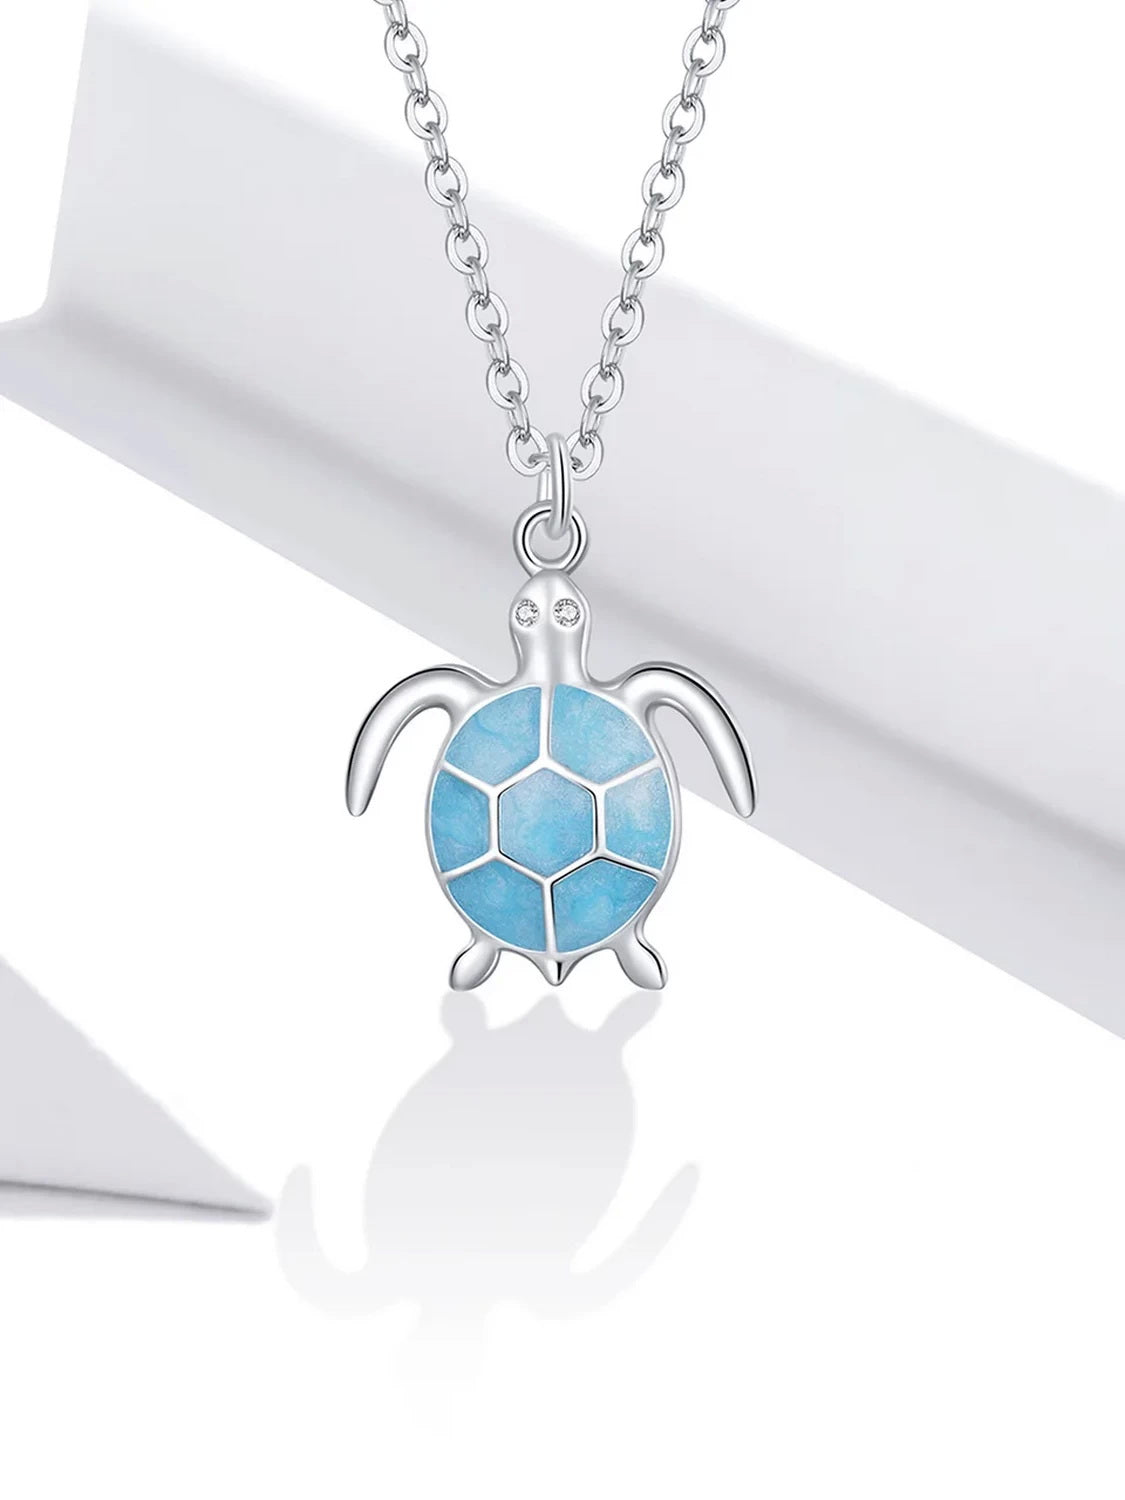 PAHALA 925 Strling Silver Sky Blue Enamel Turtle Cute Animal Pendant Necklace